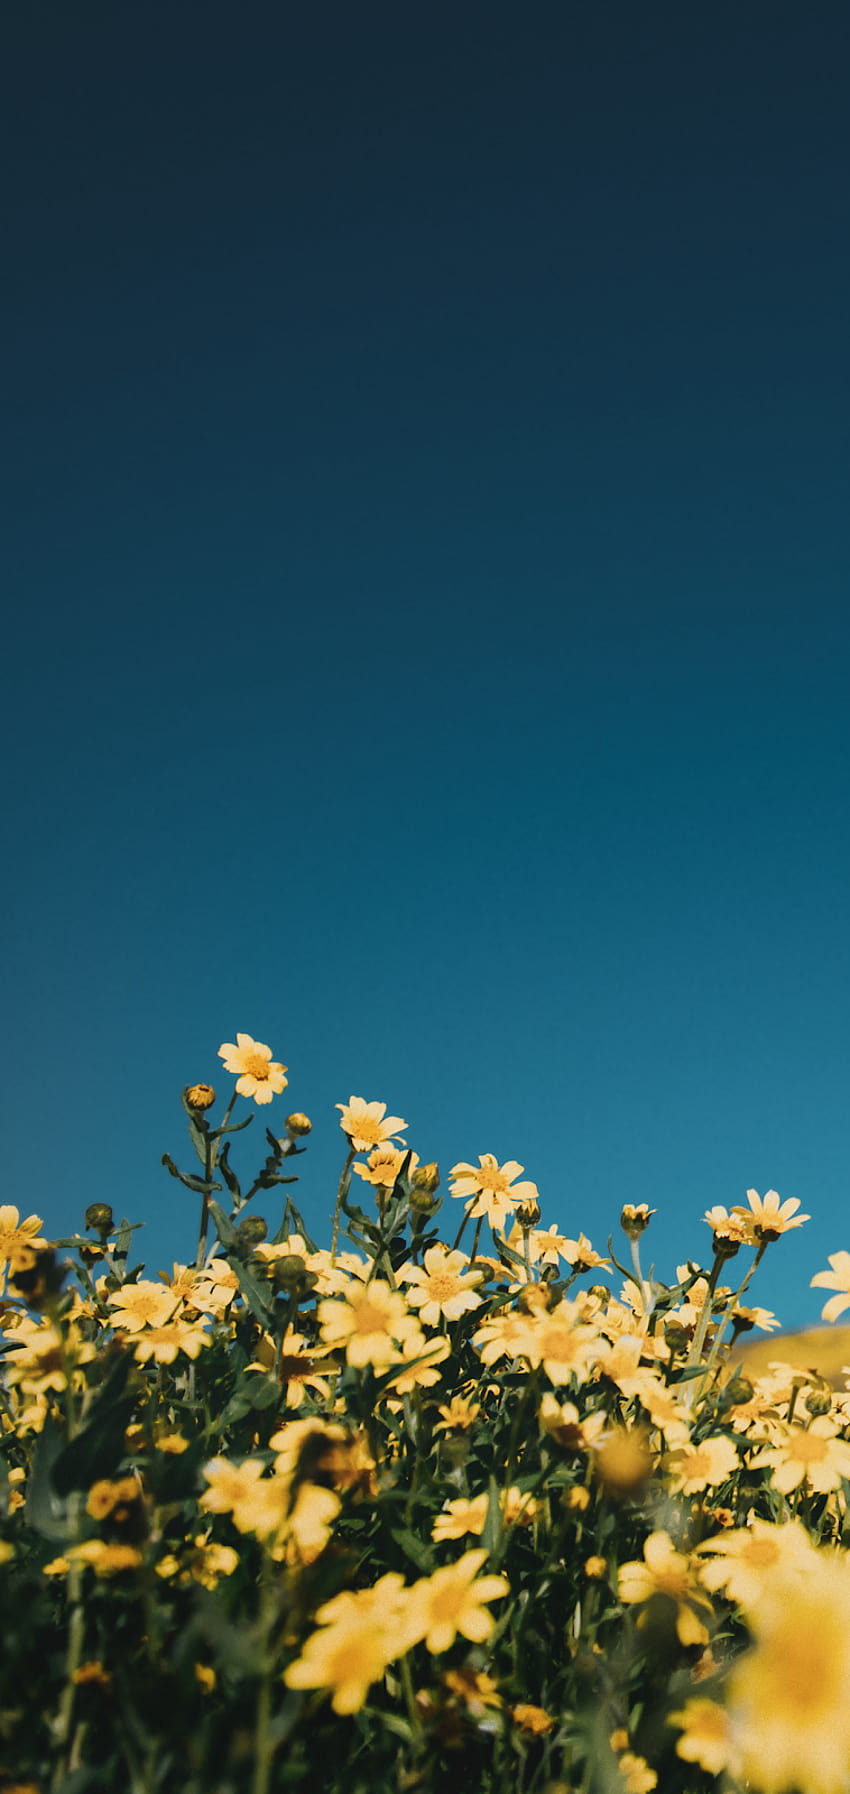 Yellow flowers in the blue sky in 2020, aesthetic sky flowers HD phone wallpaper